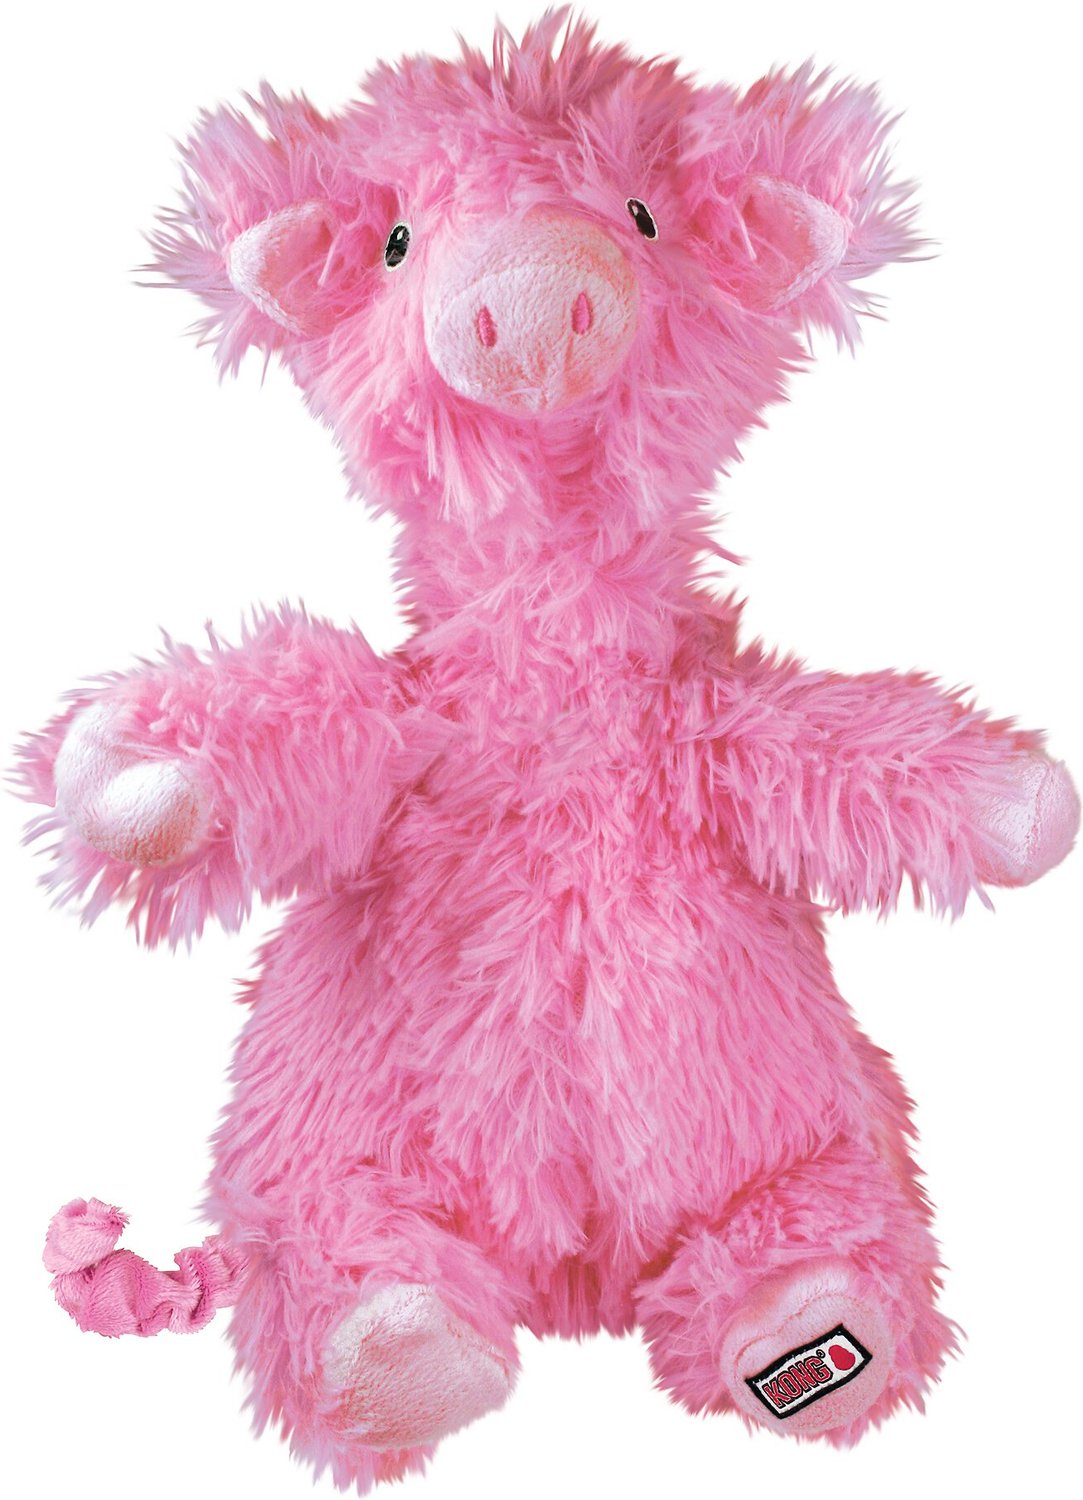 stuffed pink pig dog toy